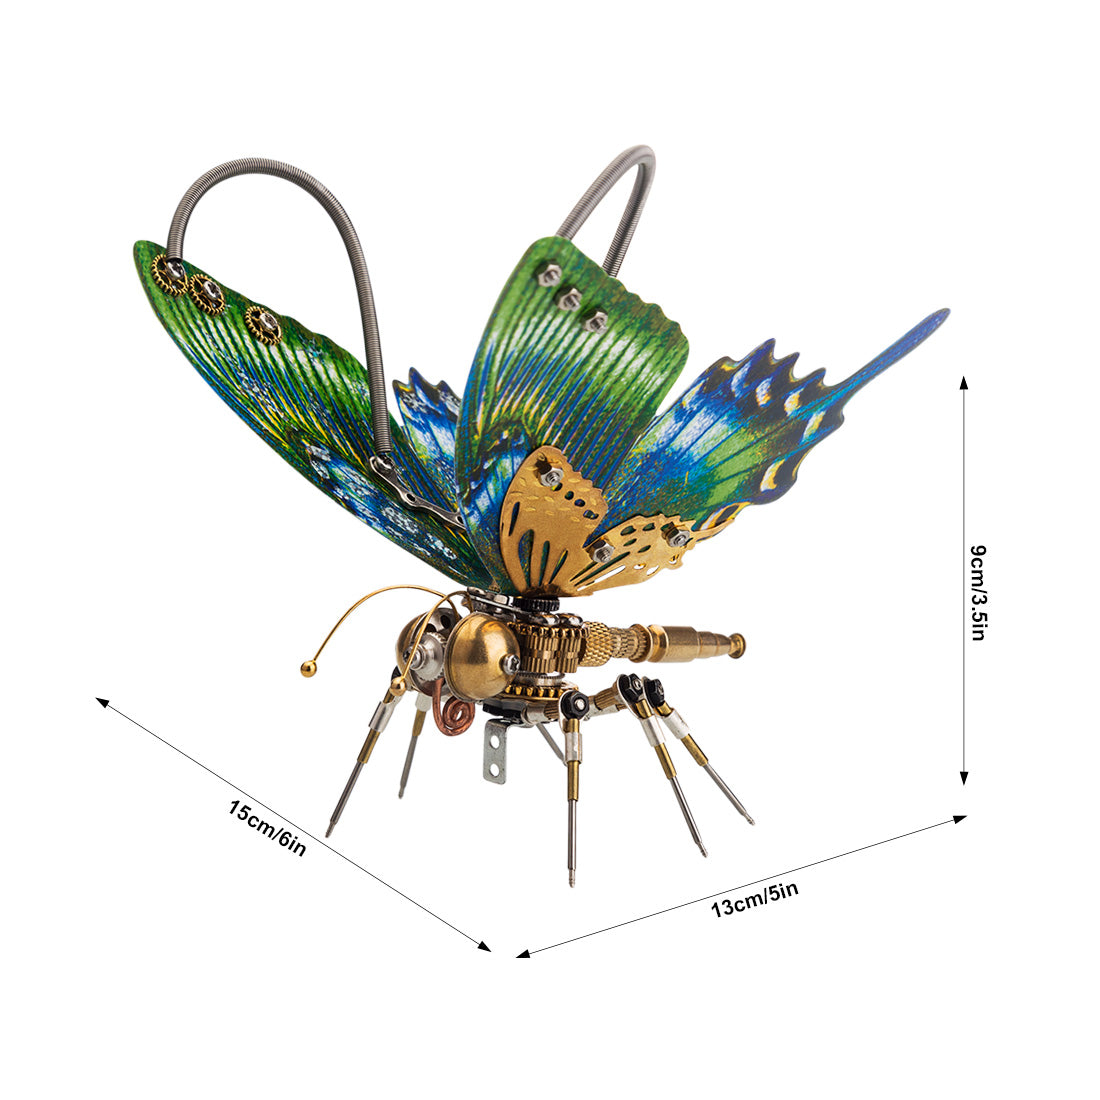 Steampunk Butterfly Alpine Black Swallowtail Papilio Maackii Model 3D DIY Kit With Flower Base